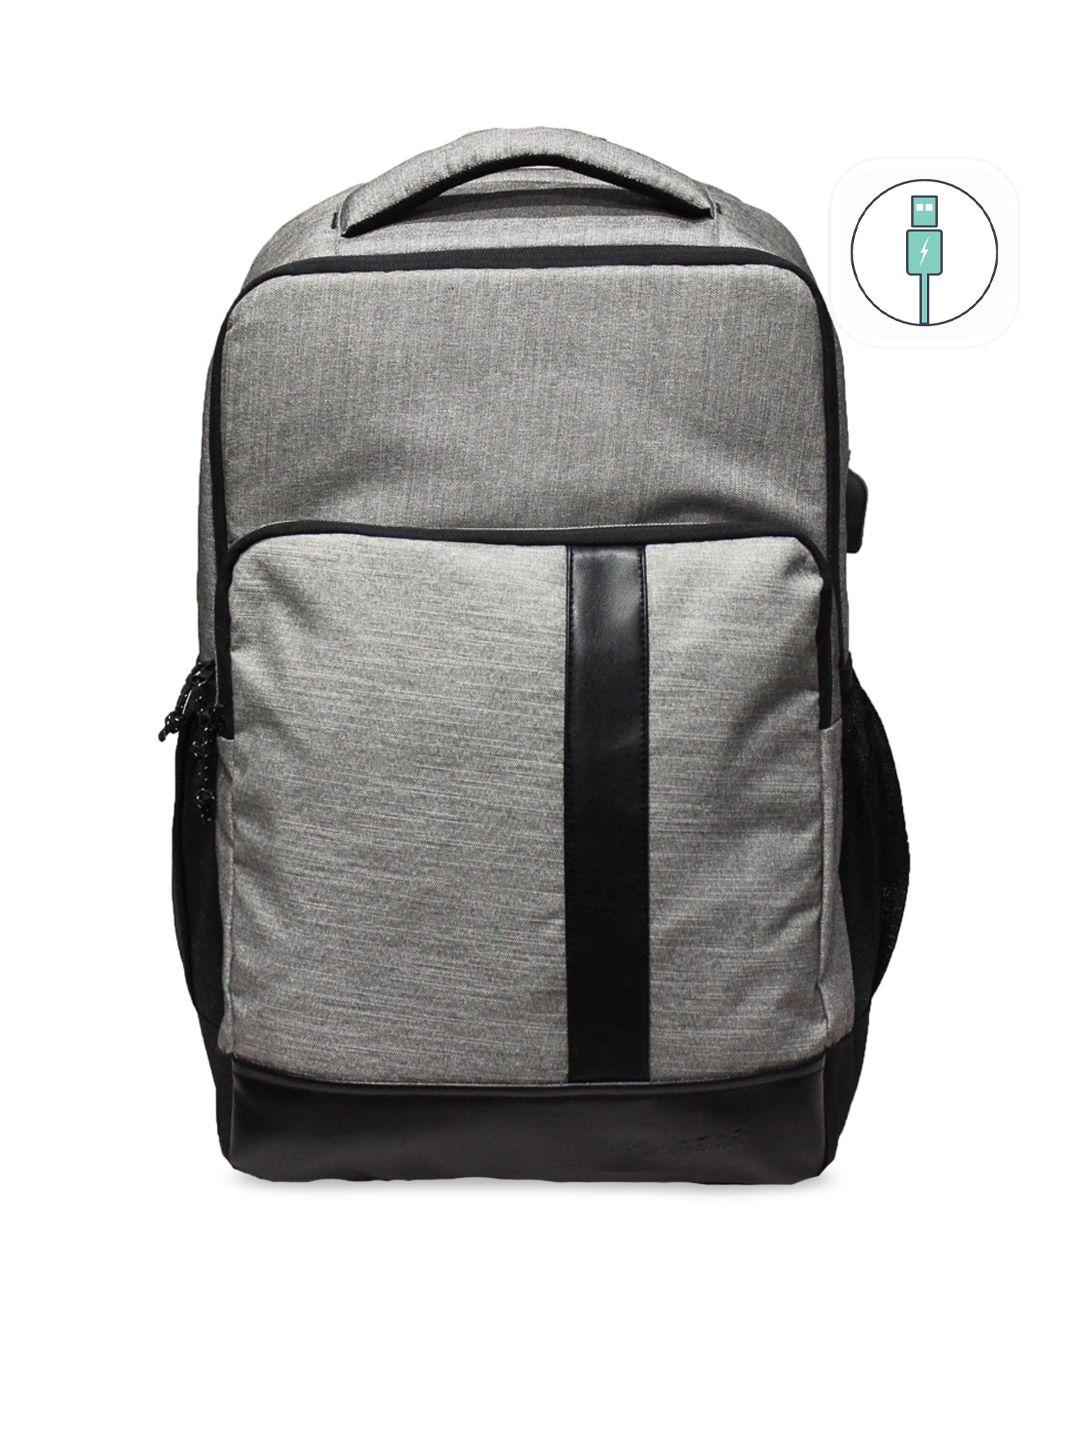 f gear unisex grey & black backpack